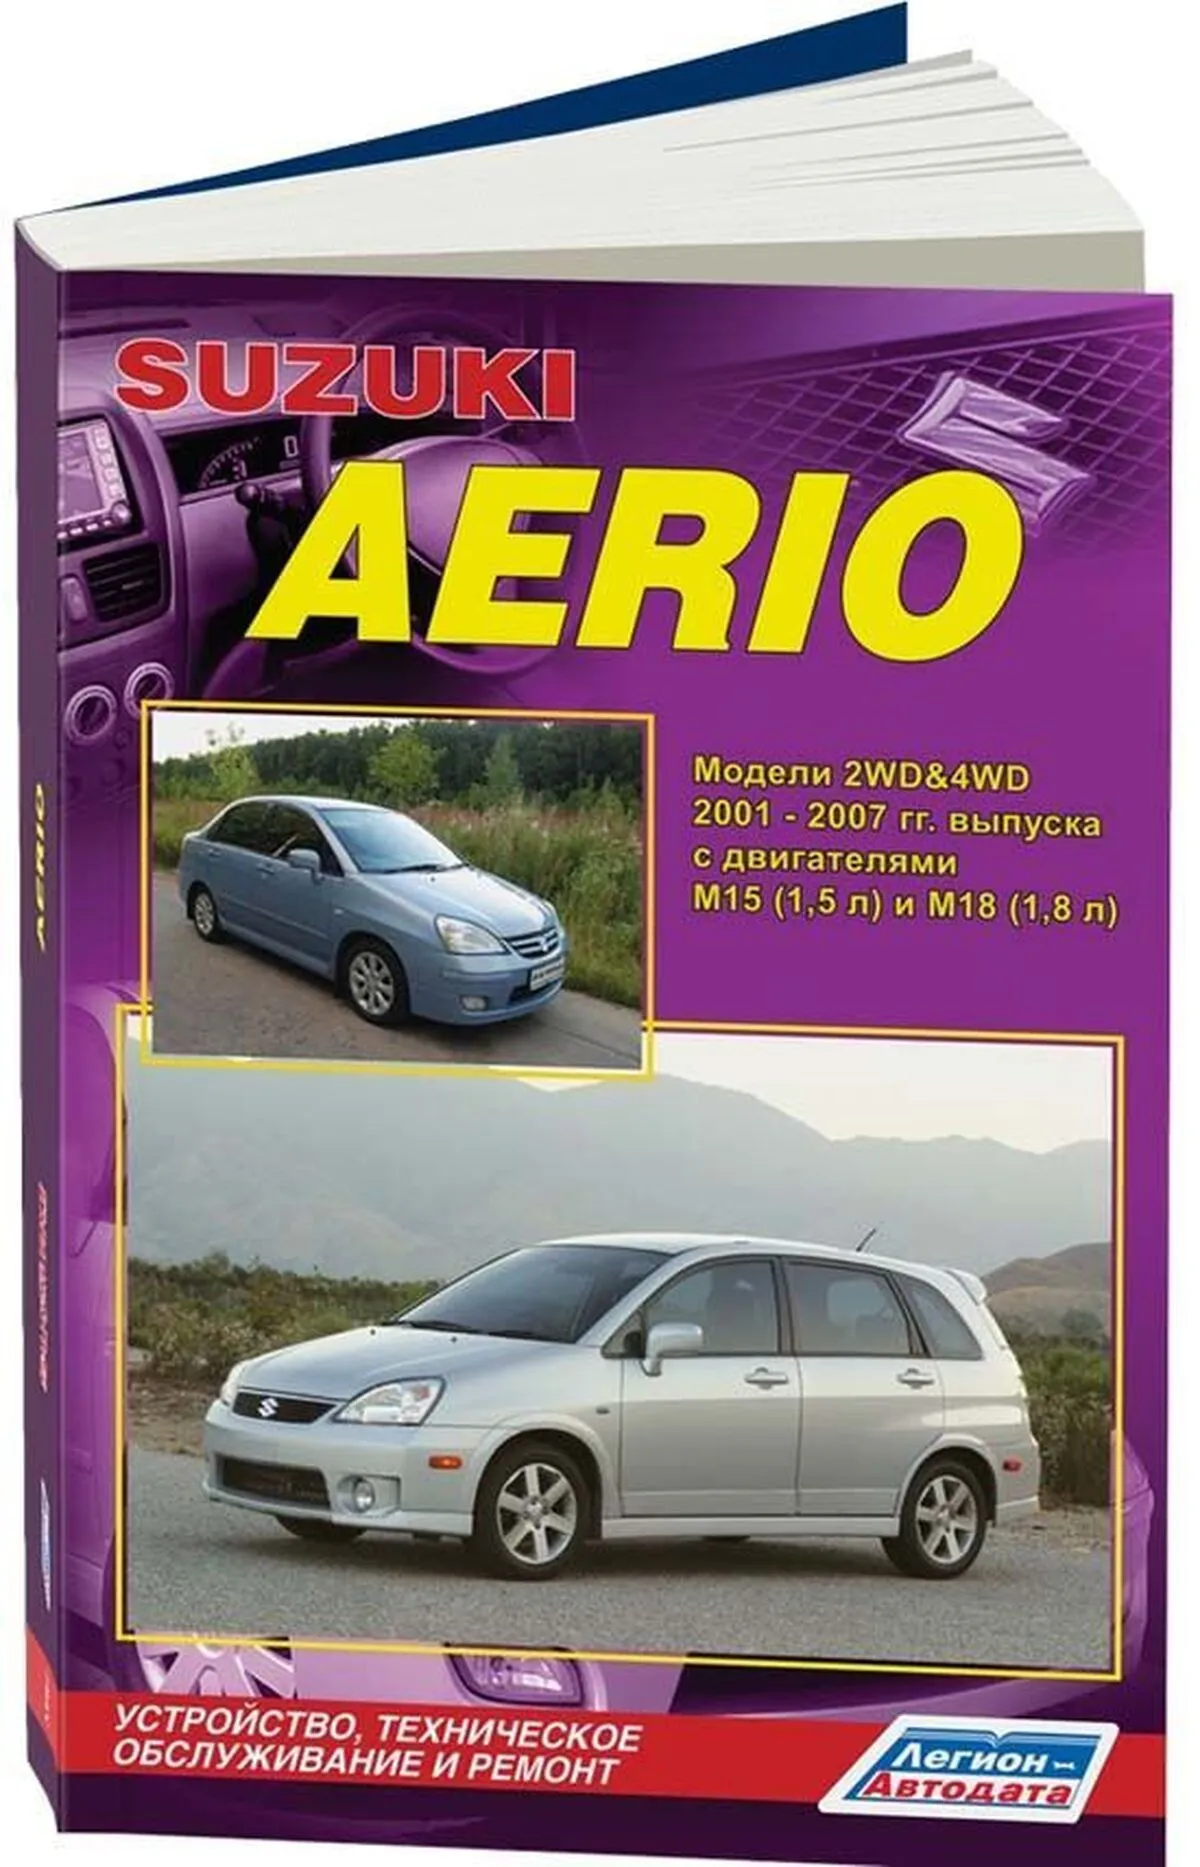 Книга: SUZUKI AERIO (б) 2001-2007 г.в., рем., экспл., то | Легион-Aвтодата